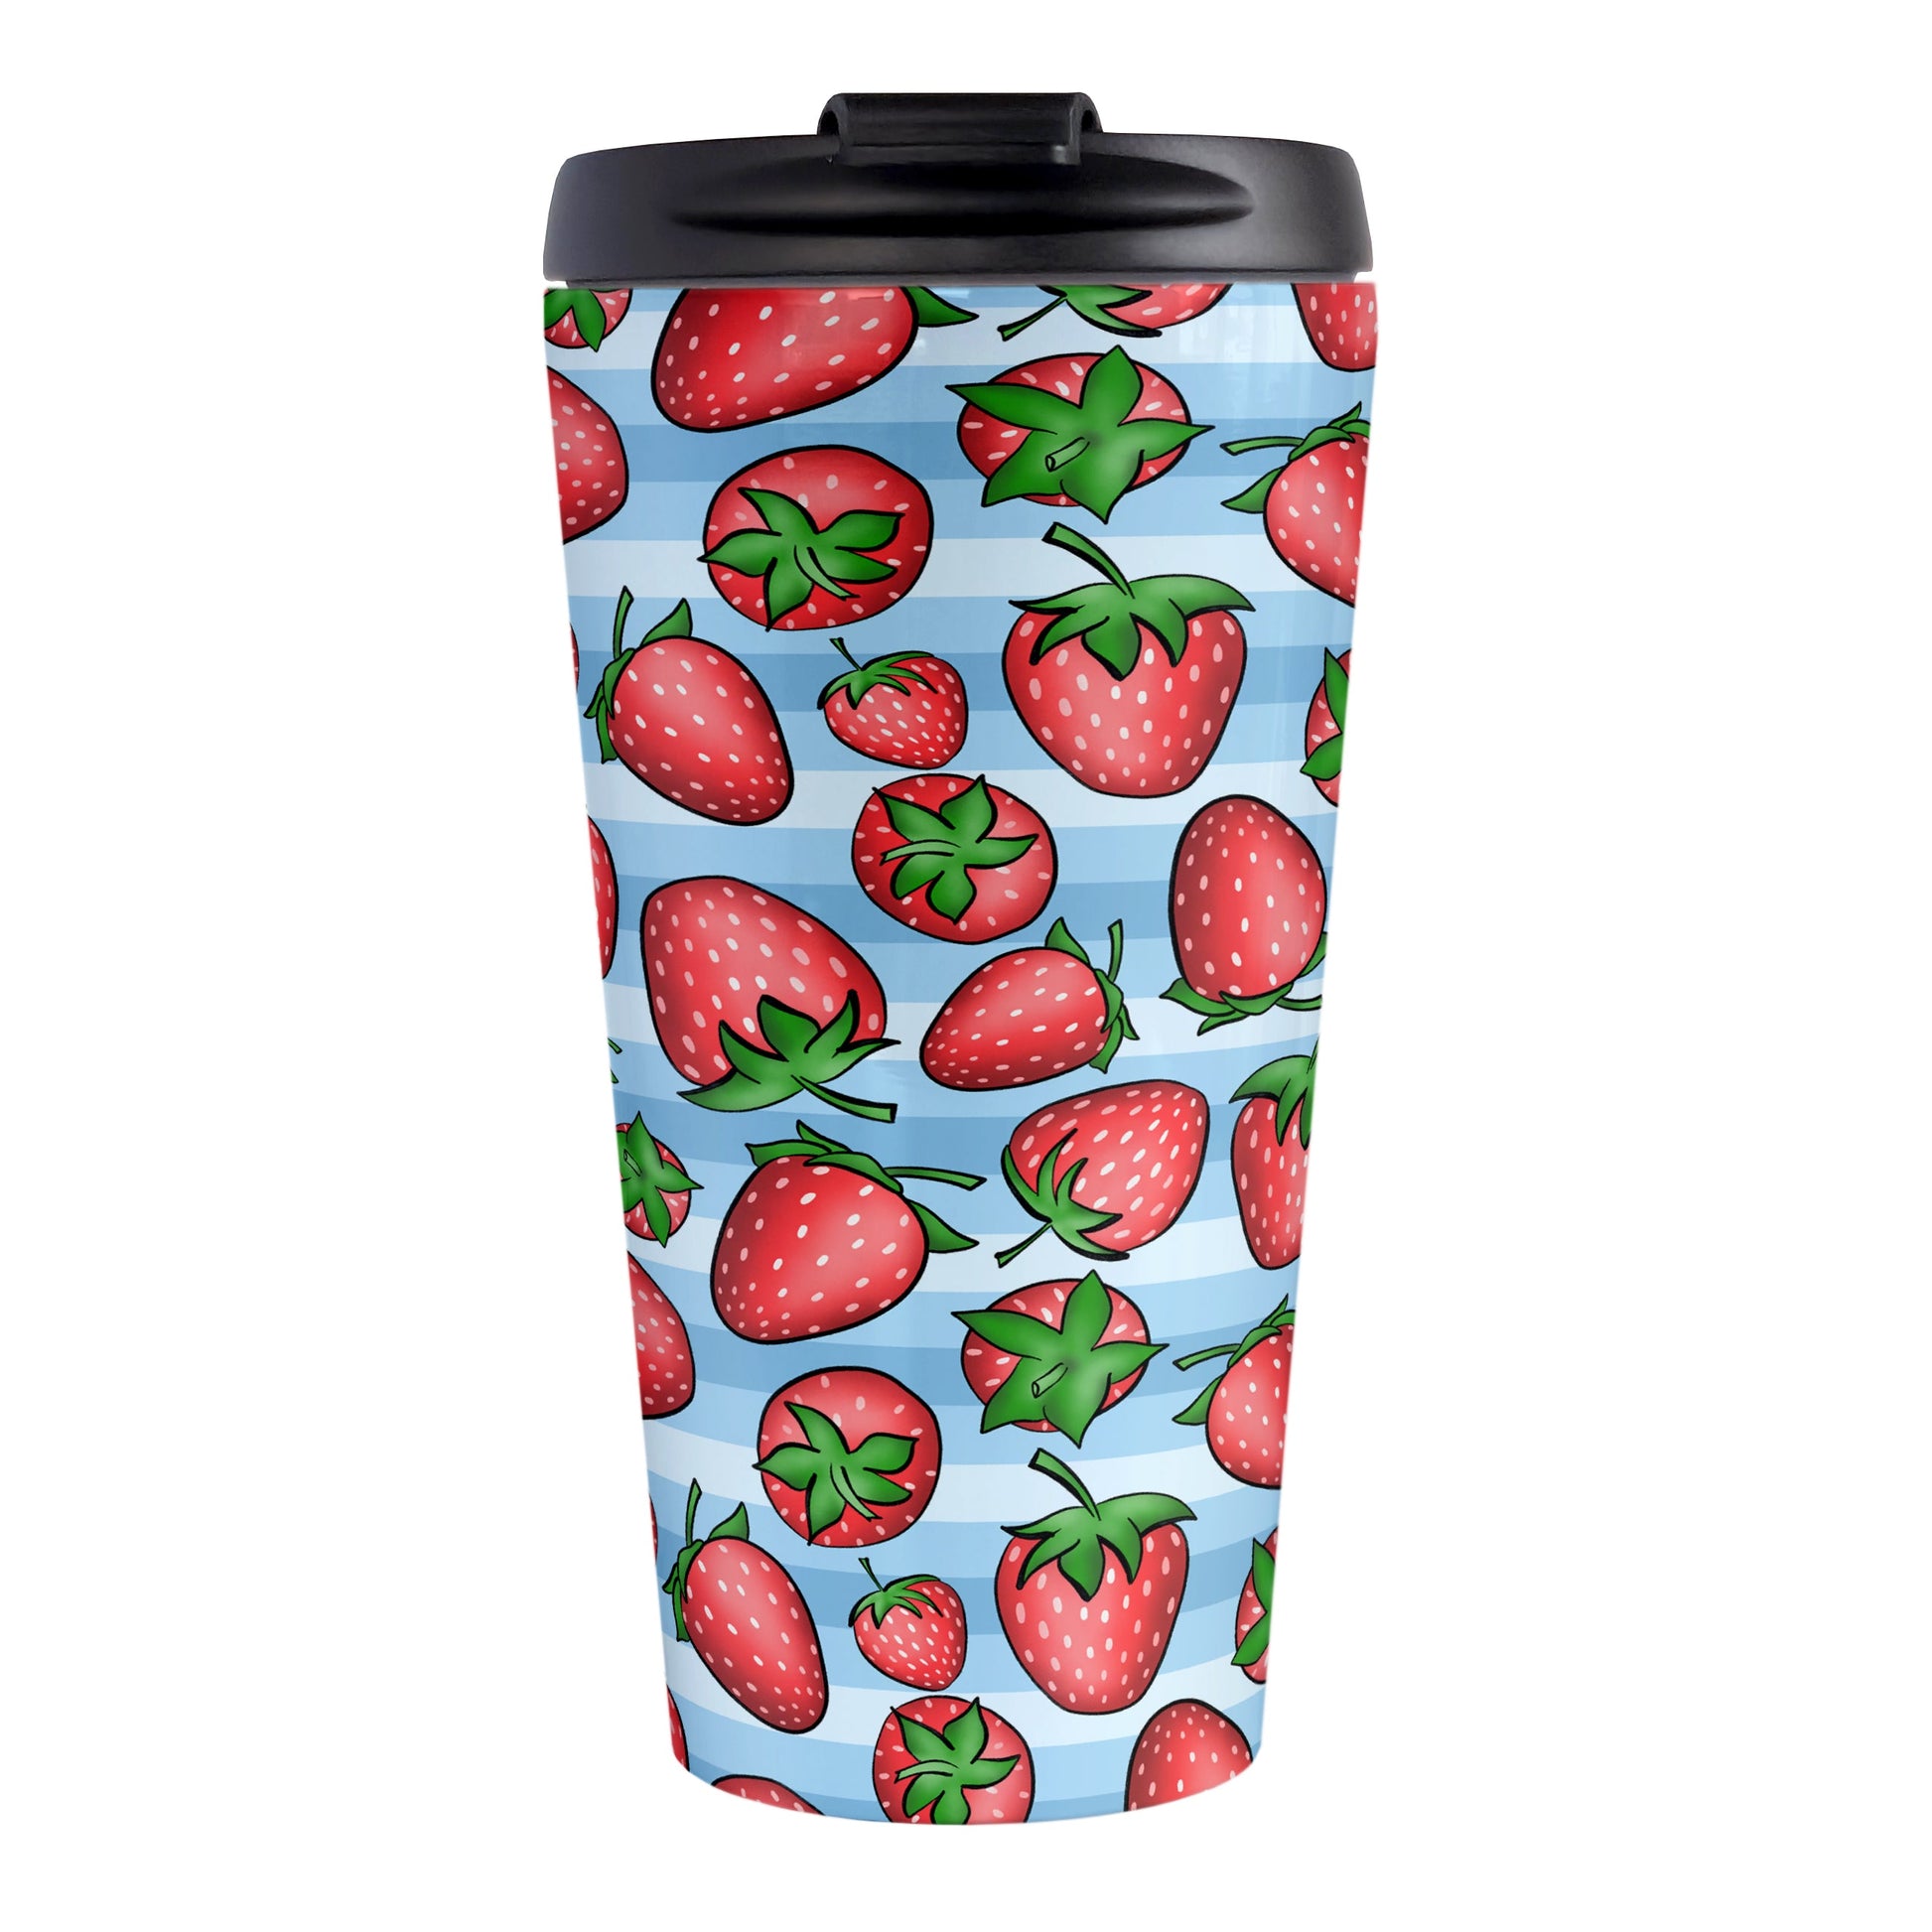 Strawberries on Blue Stripes Travel Mug (15oz) at Amy's Coffee Mugs